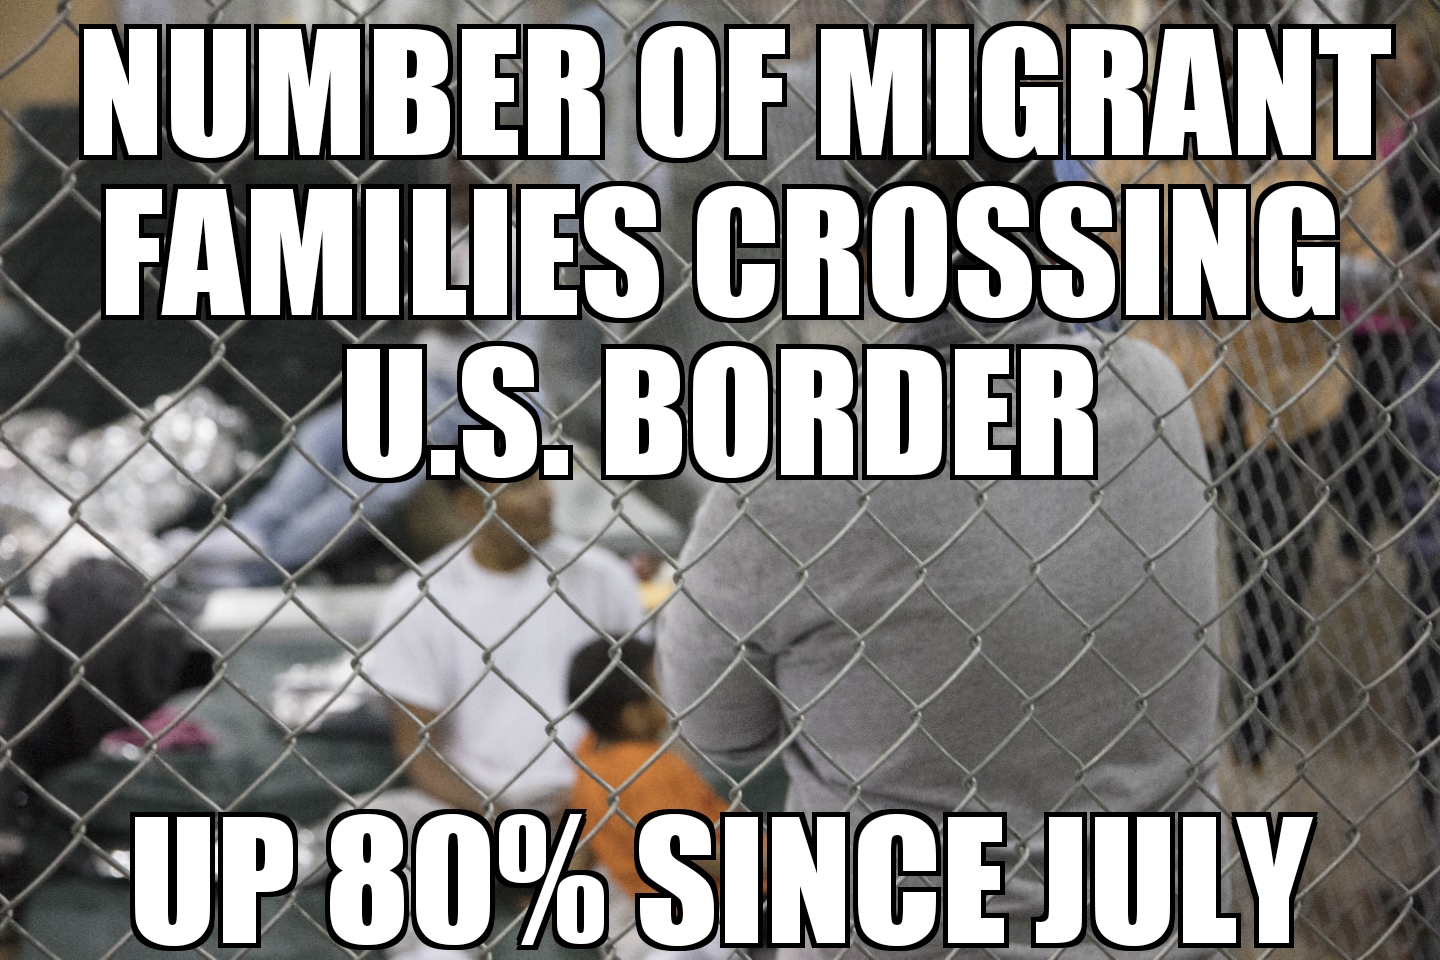 Migrant family crossings up at U.S. border